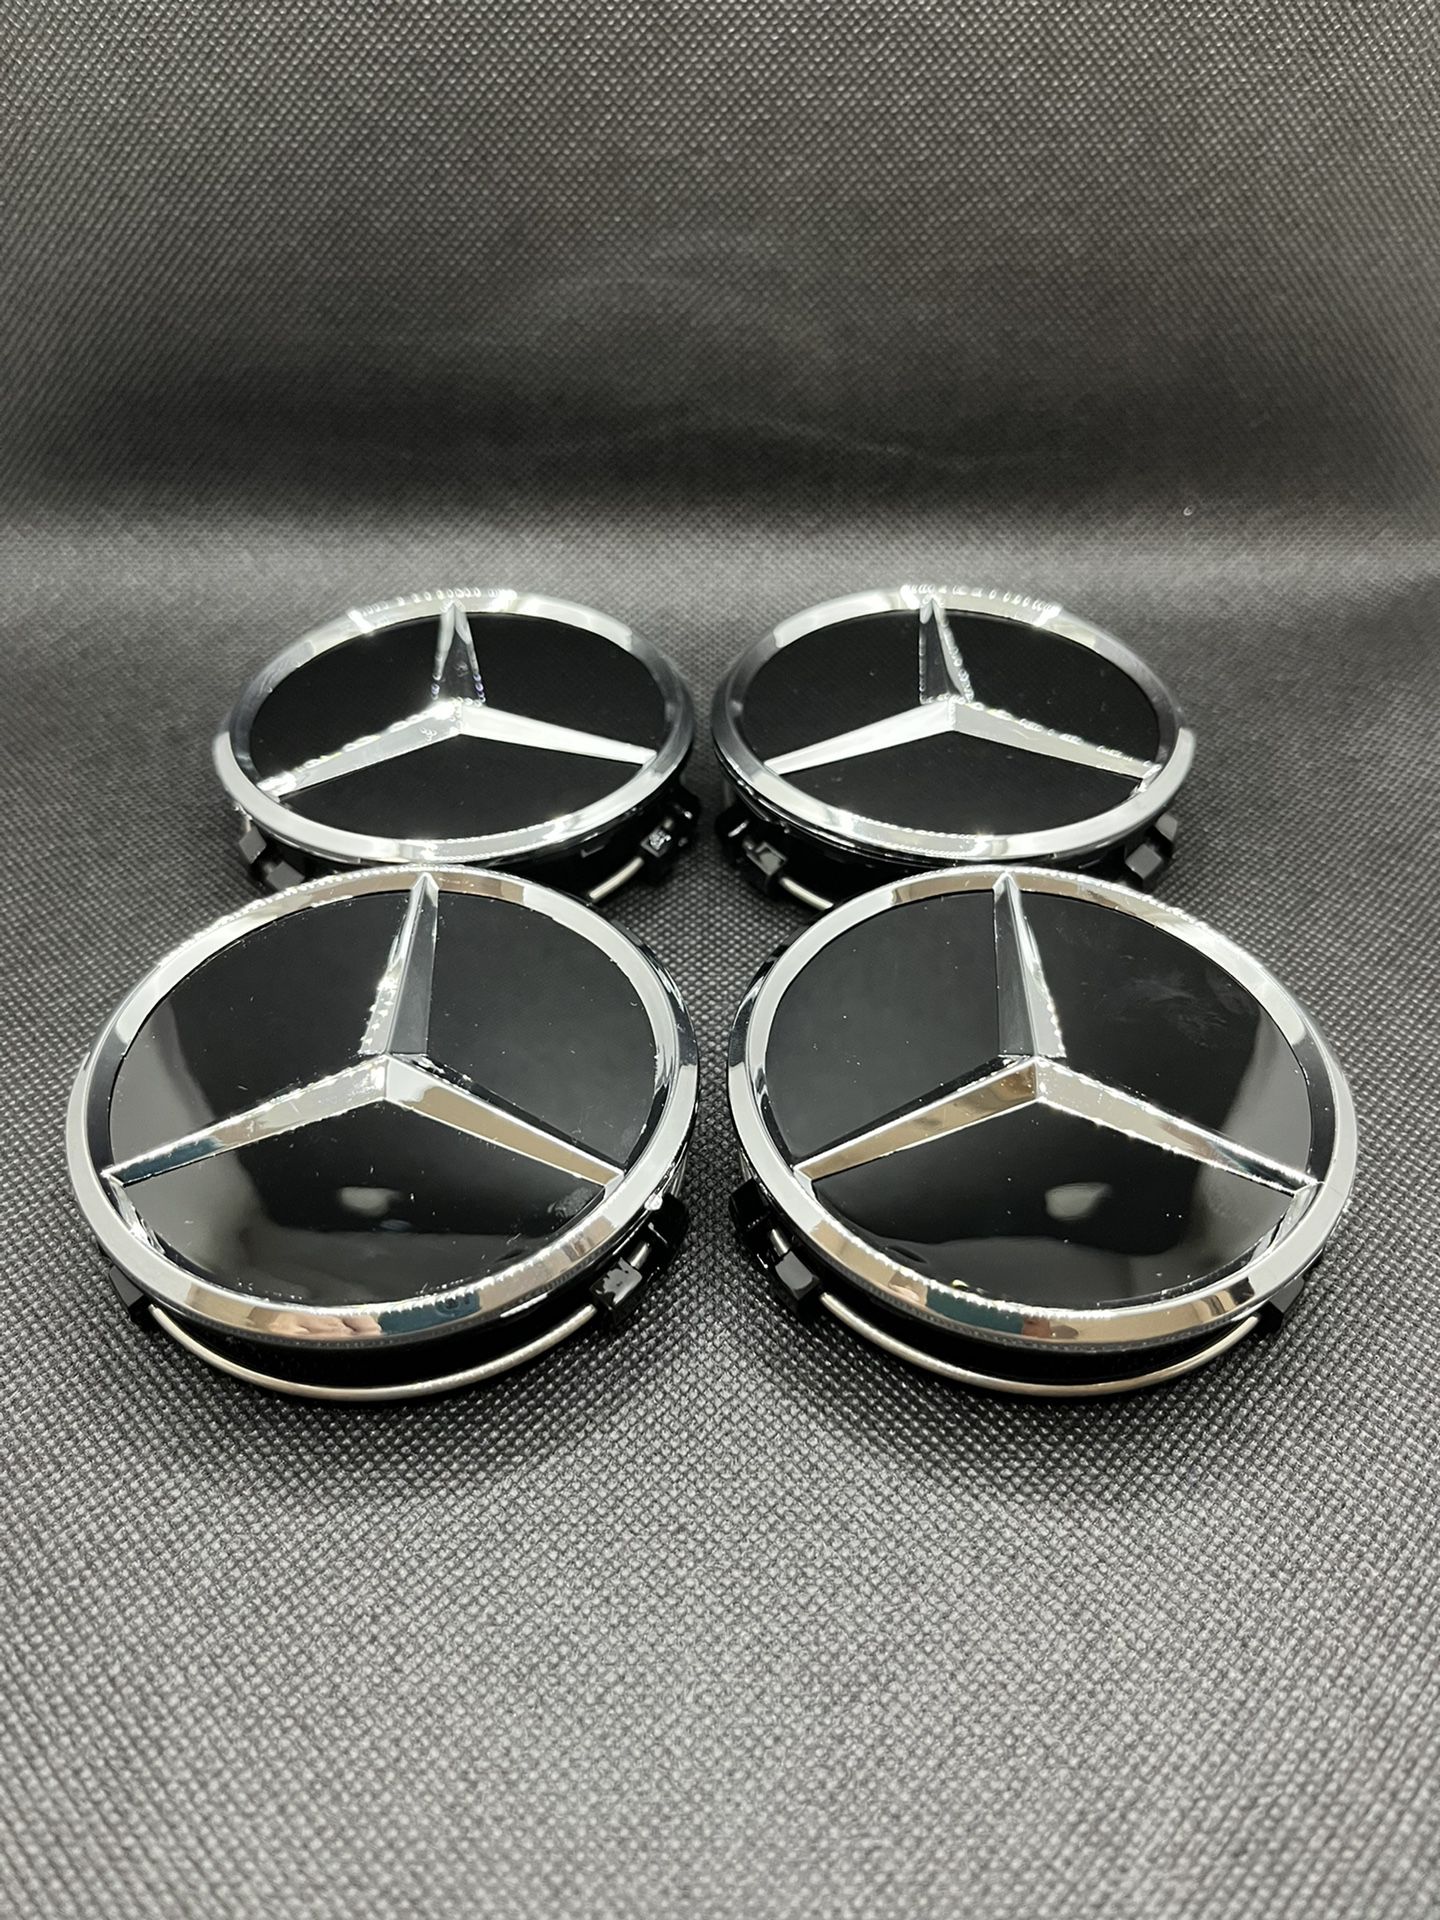 Set Of 4 Fits Mercedes Wheels Rim Cente Caps 75mm